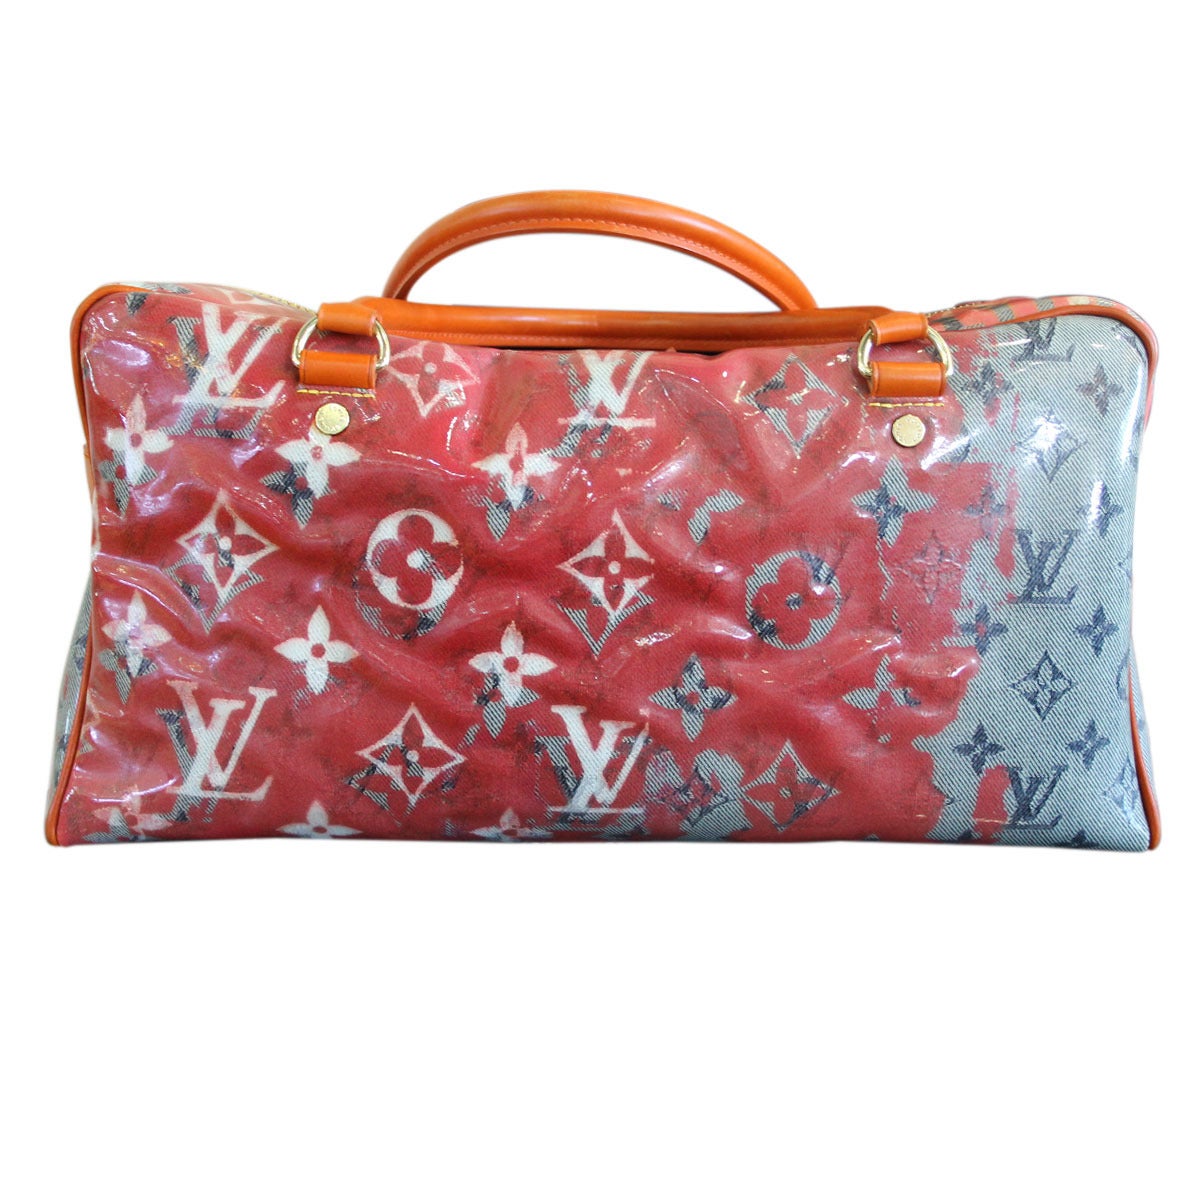 Brand: Louis Vuitton
Handles: Orange Cowhide Leather Rolled handles; Drop: 6.5